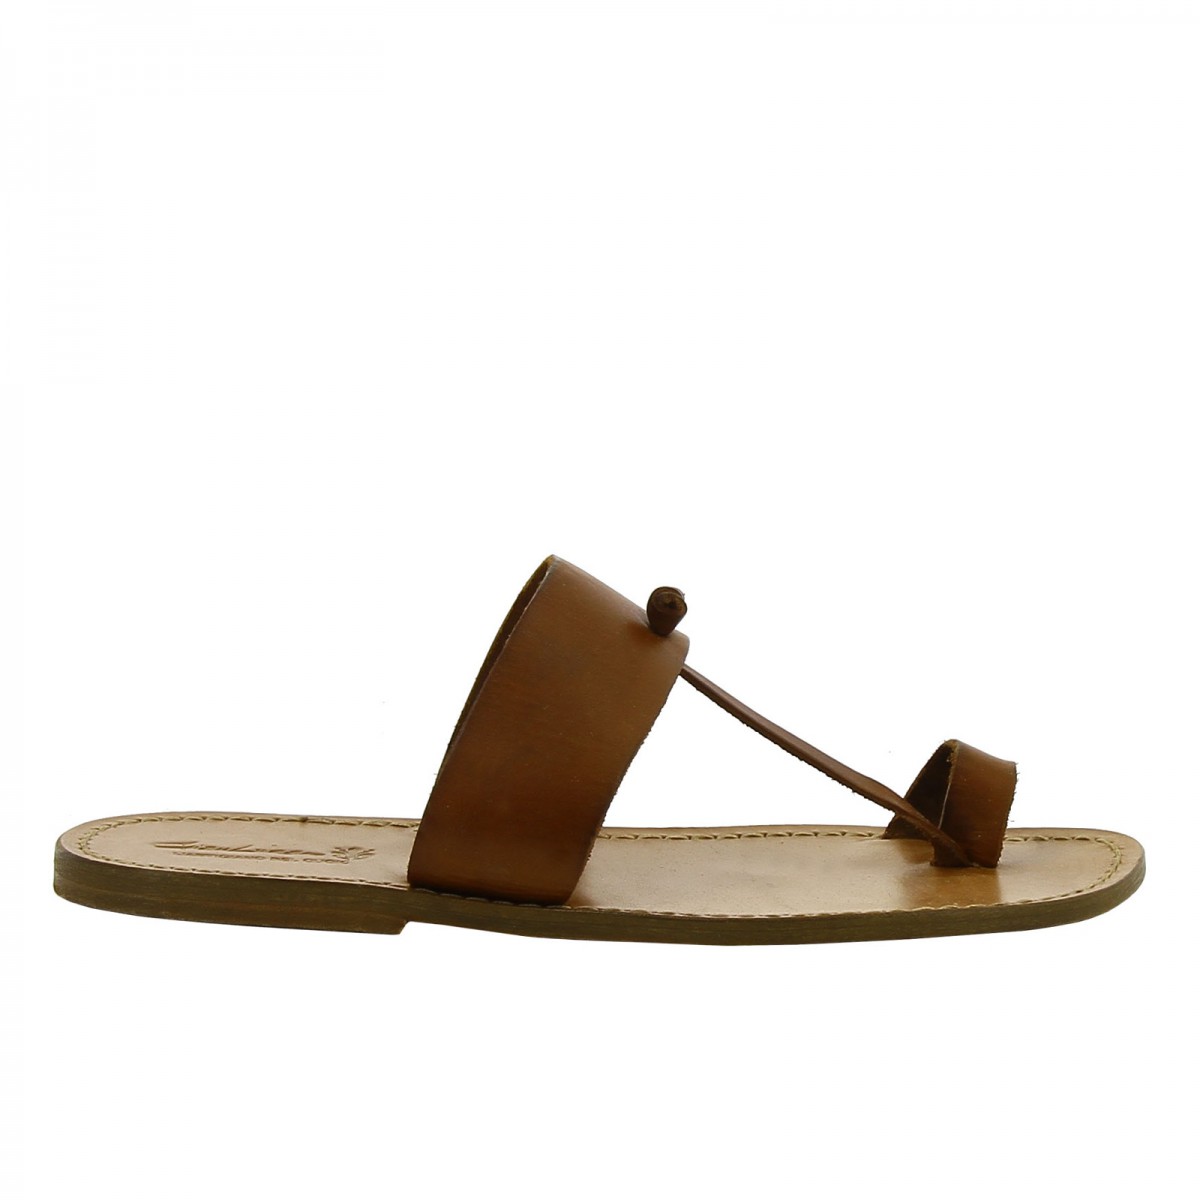 Tan leather toe loop sandals for men 